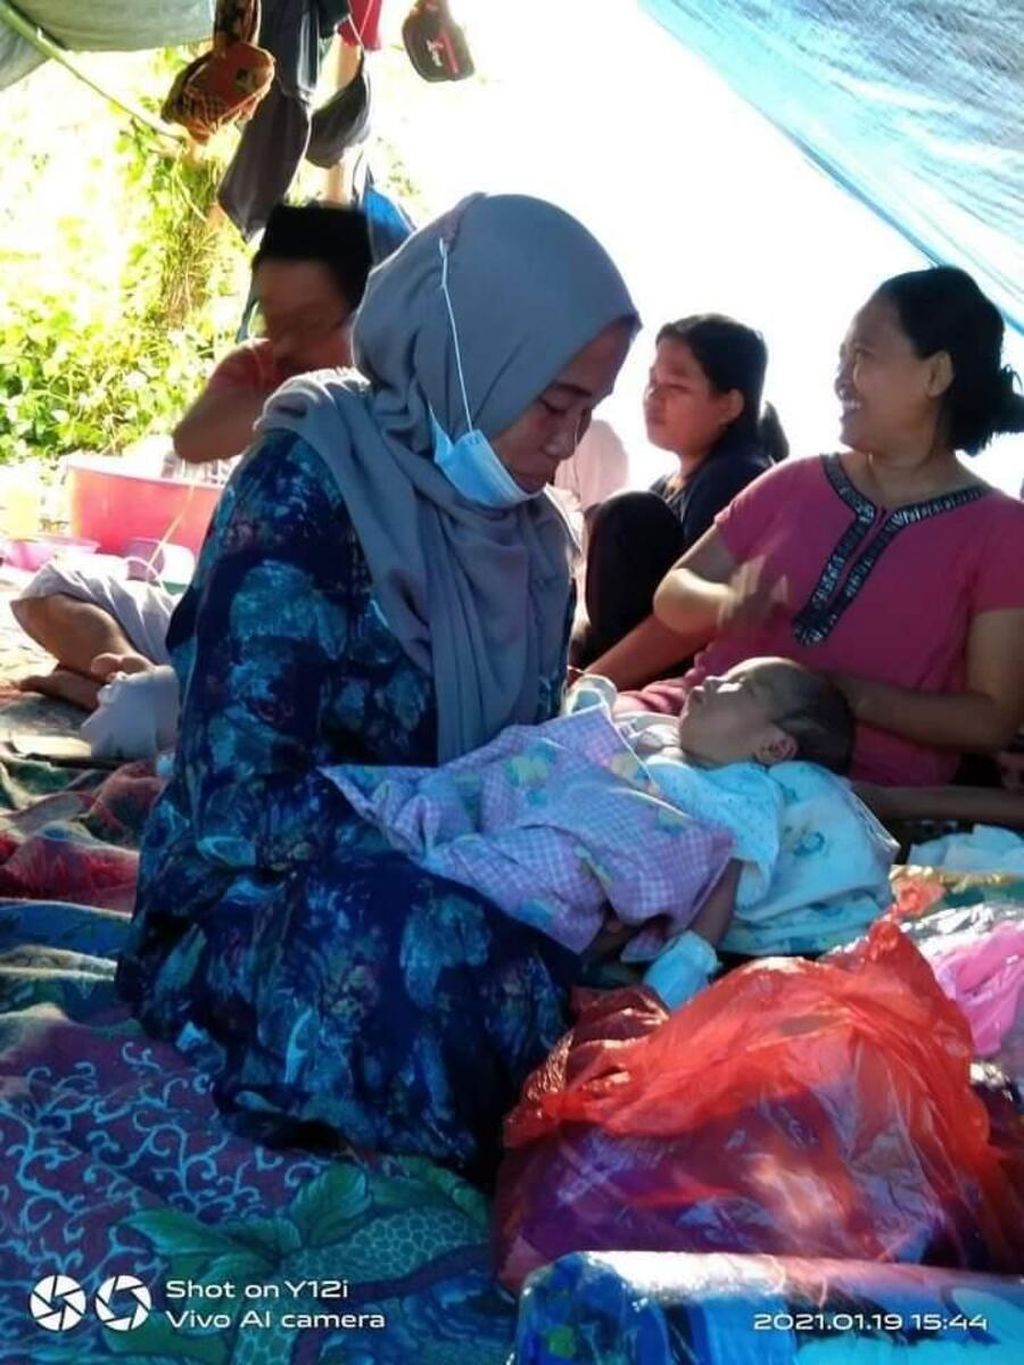 Bencana di Sulawesi Barat telah membangkitkan aksi solidaritas masyarakat, termasuk gerak cepat dari organisasi-organisasi perempuan. Pascagempa, Pos Perempuan Tanggap Darurat yang diinisiasi oleh Kapal Perempuan bekerja sama dengan Lentera Perempuan di Majene dan Kartini Mannakarra di Mamaju. Pengadaan barang dan koordinasi sukarelawan oleh Yayasan Kajian dan Pemberdayaan Masyarakat (YKPM) Sulawesi Selatan.